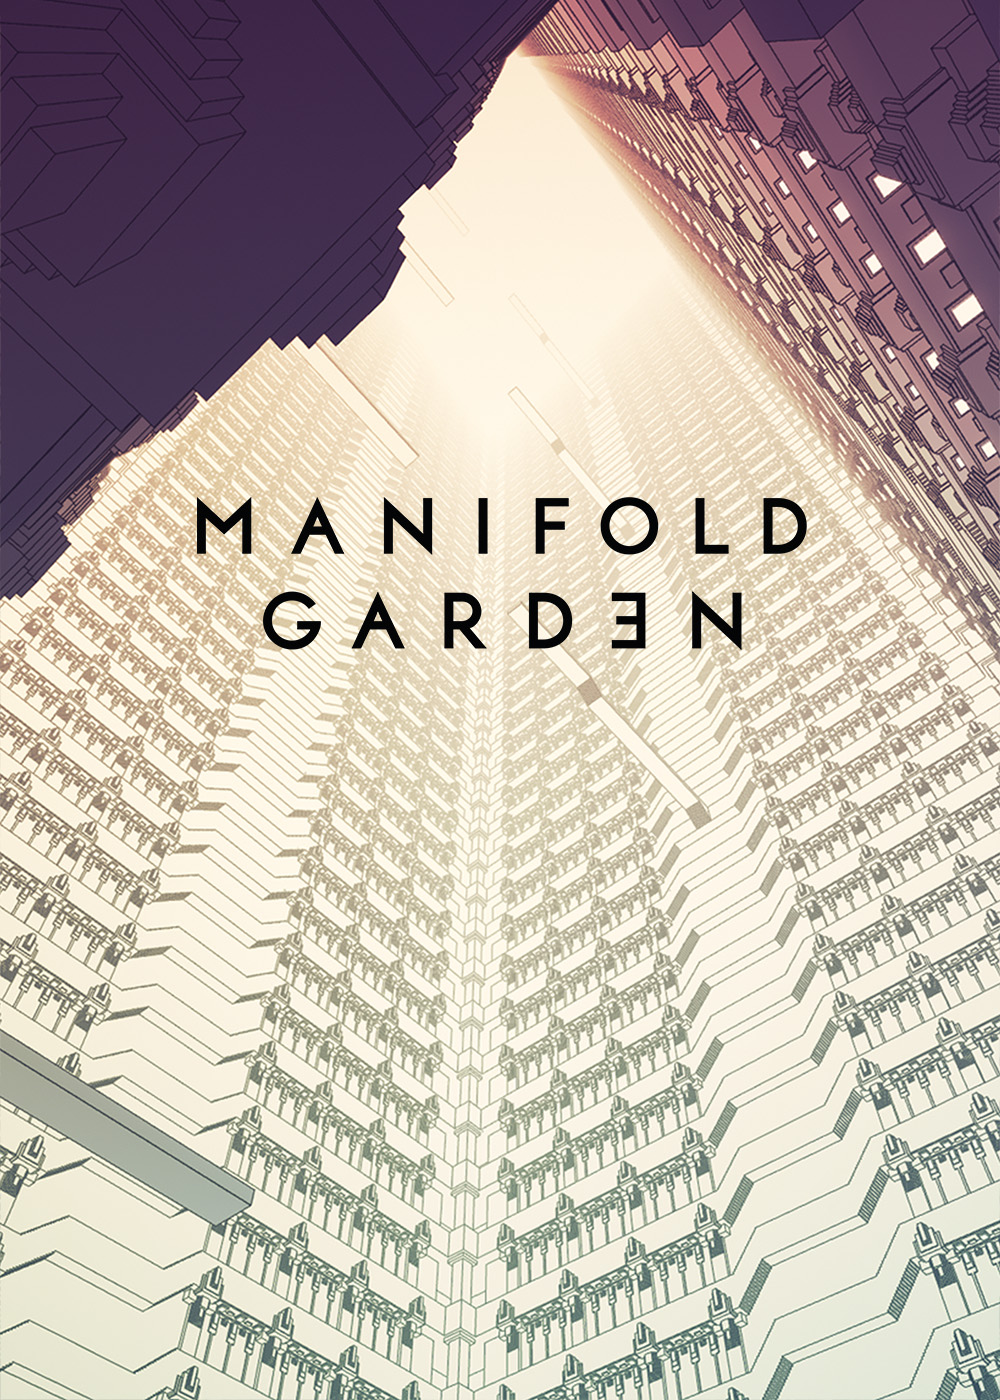 MANIFOLD GARDEN (PS5, PS4)